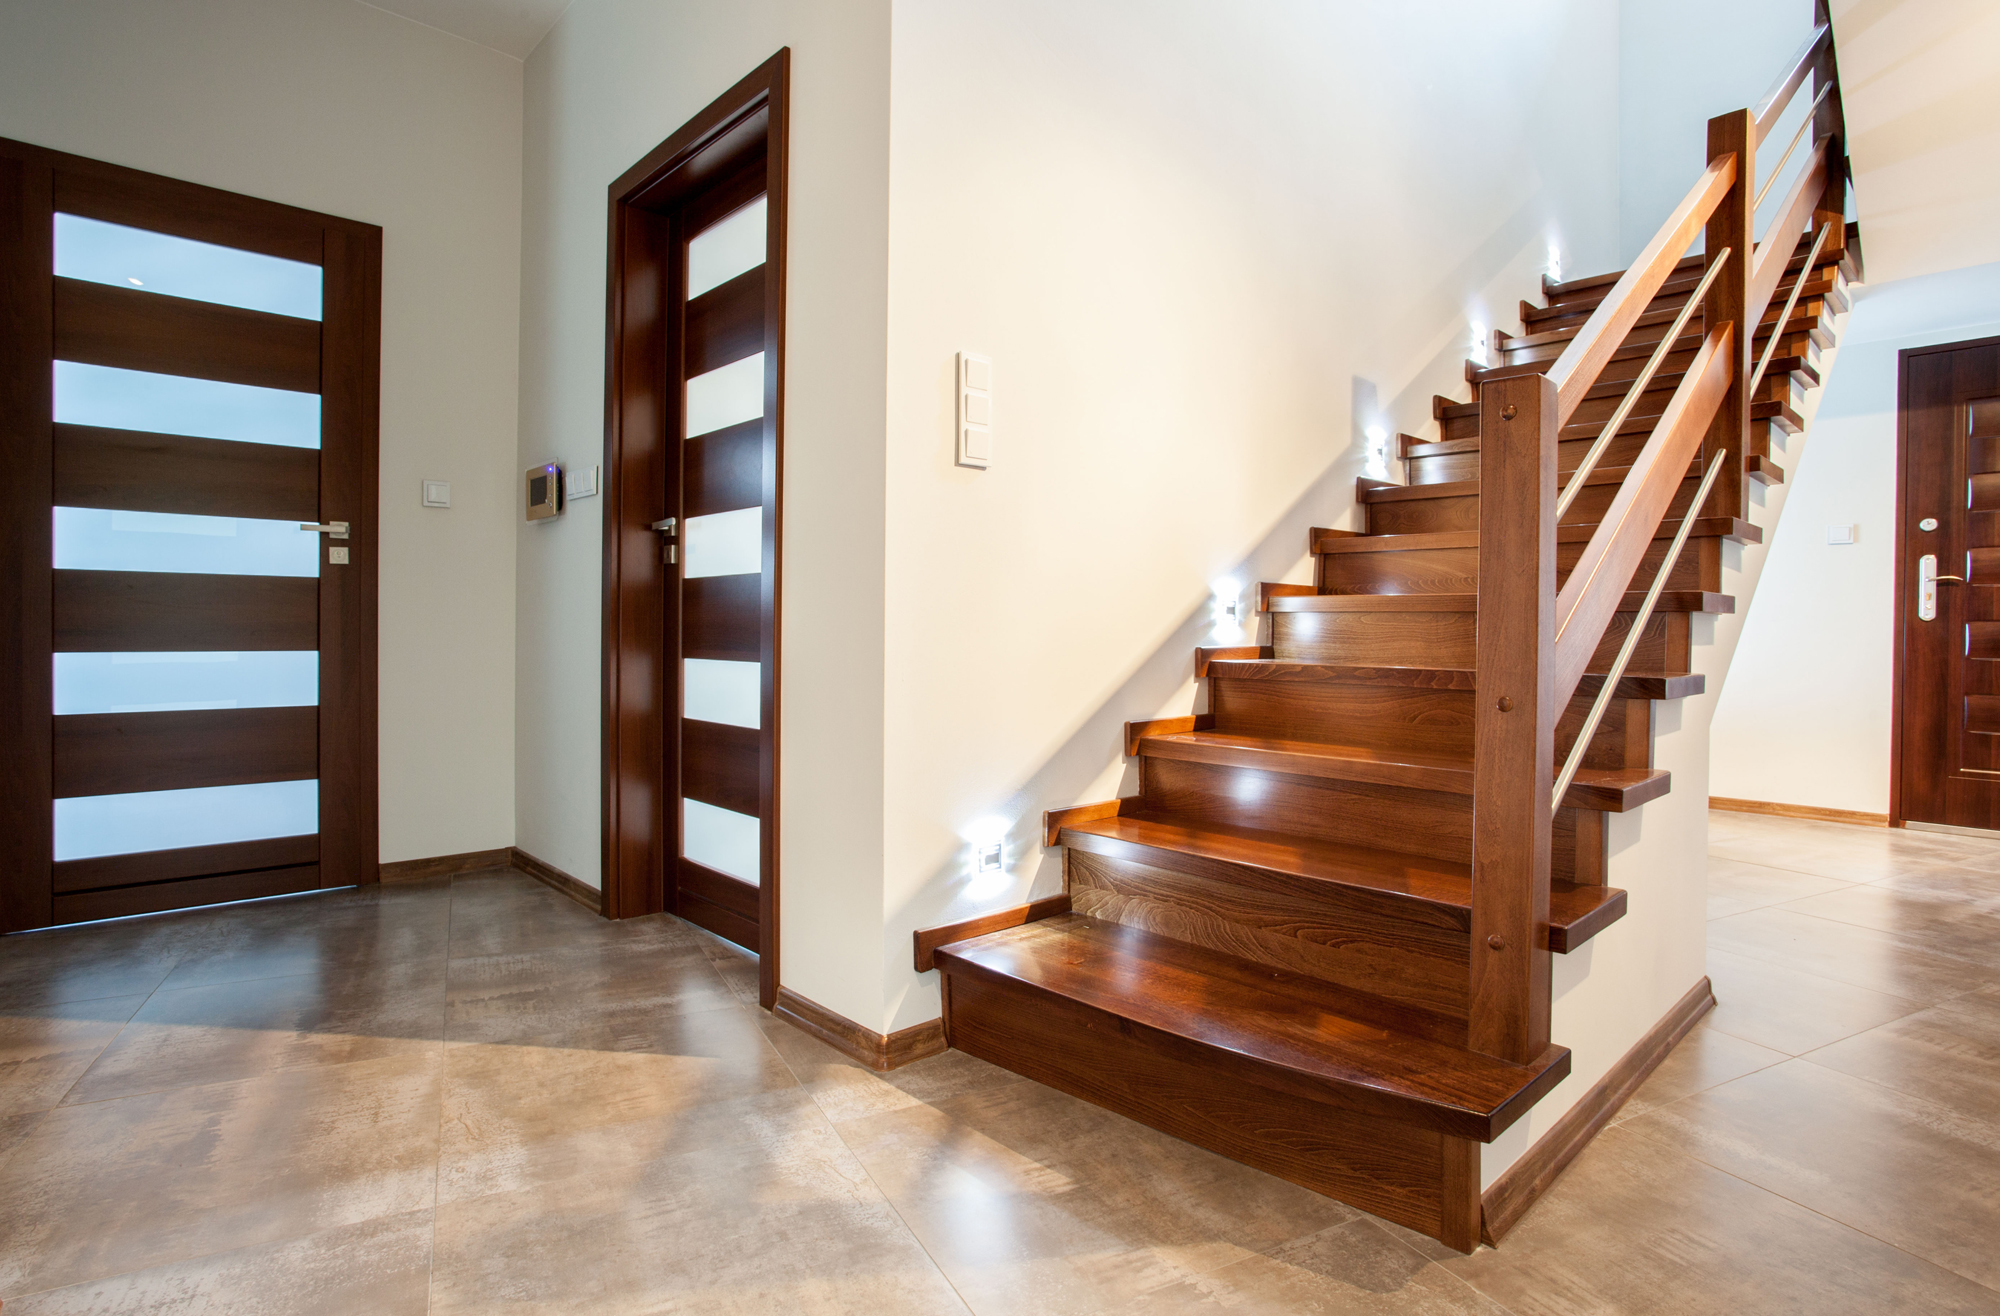 Luxury hallway with woden stairs to bedroom on teh floor